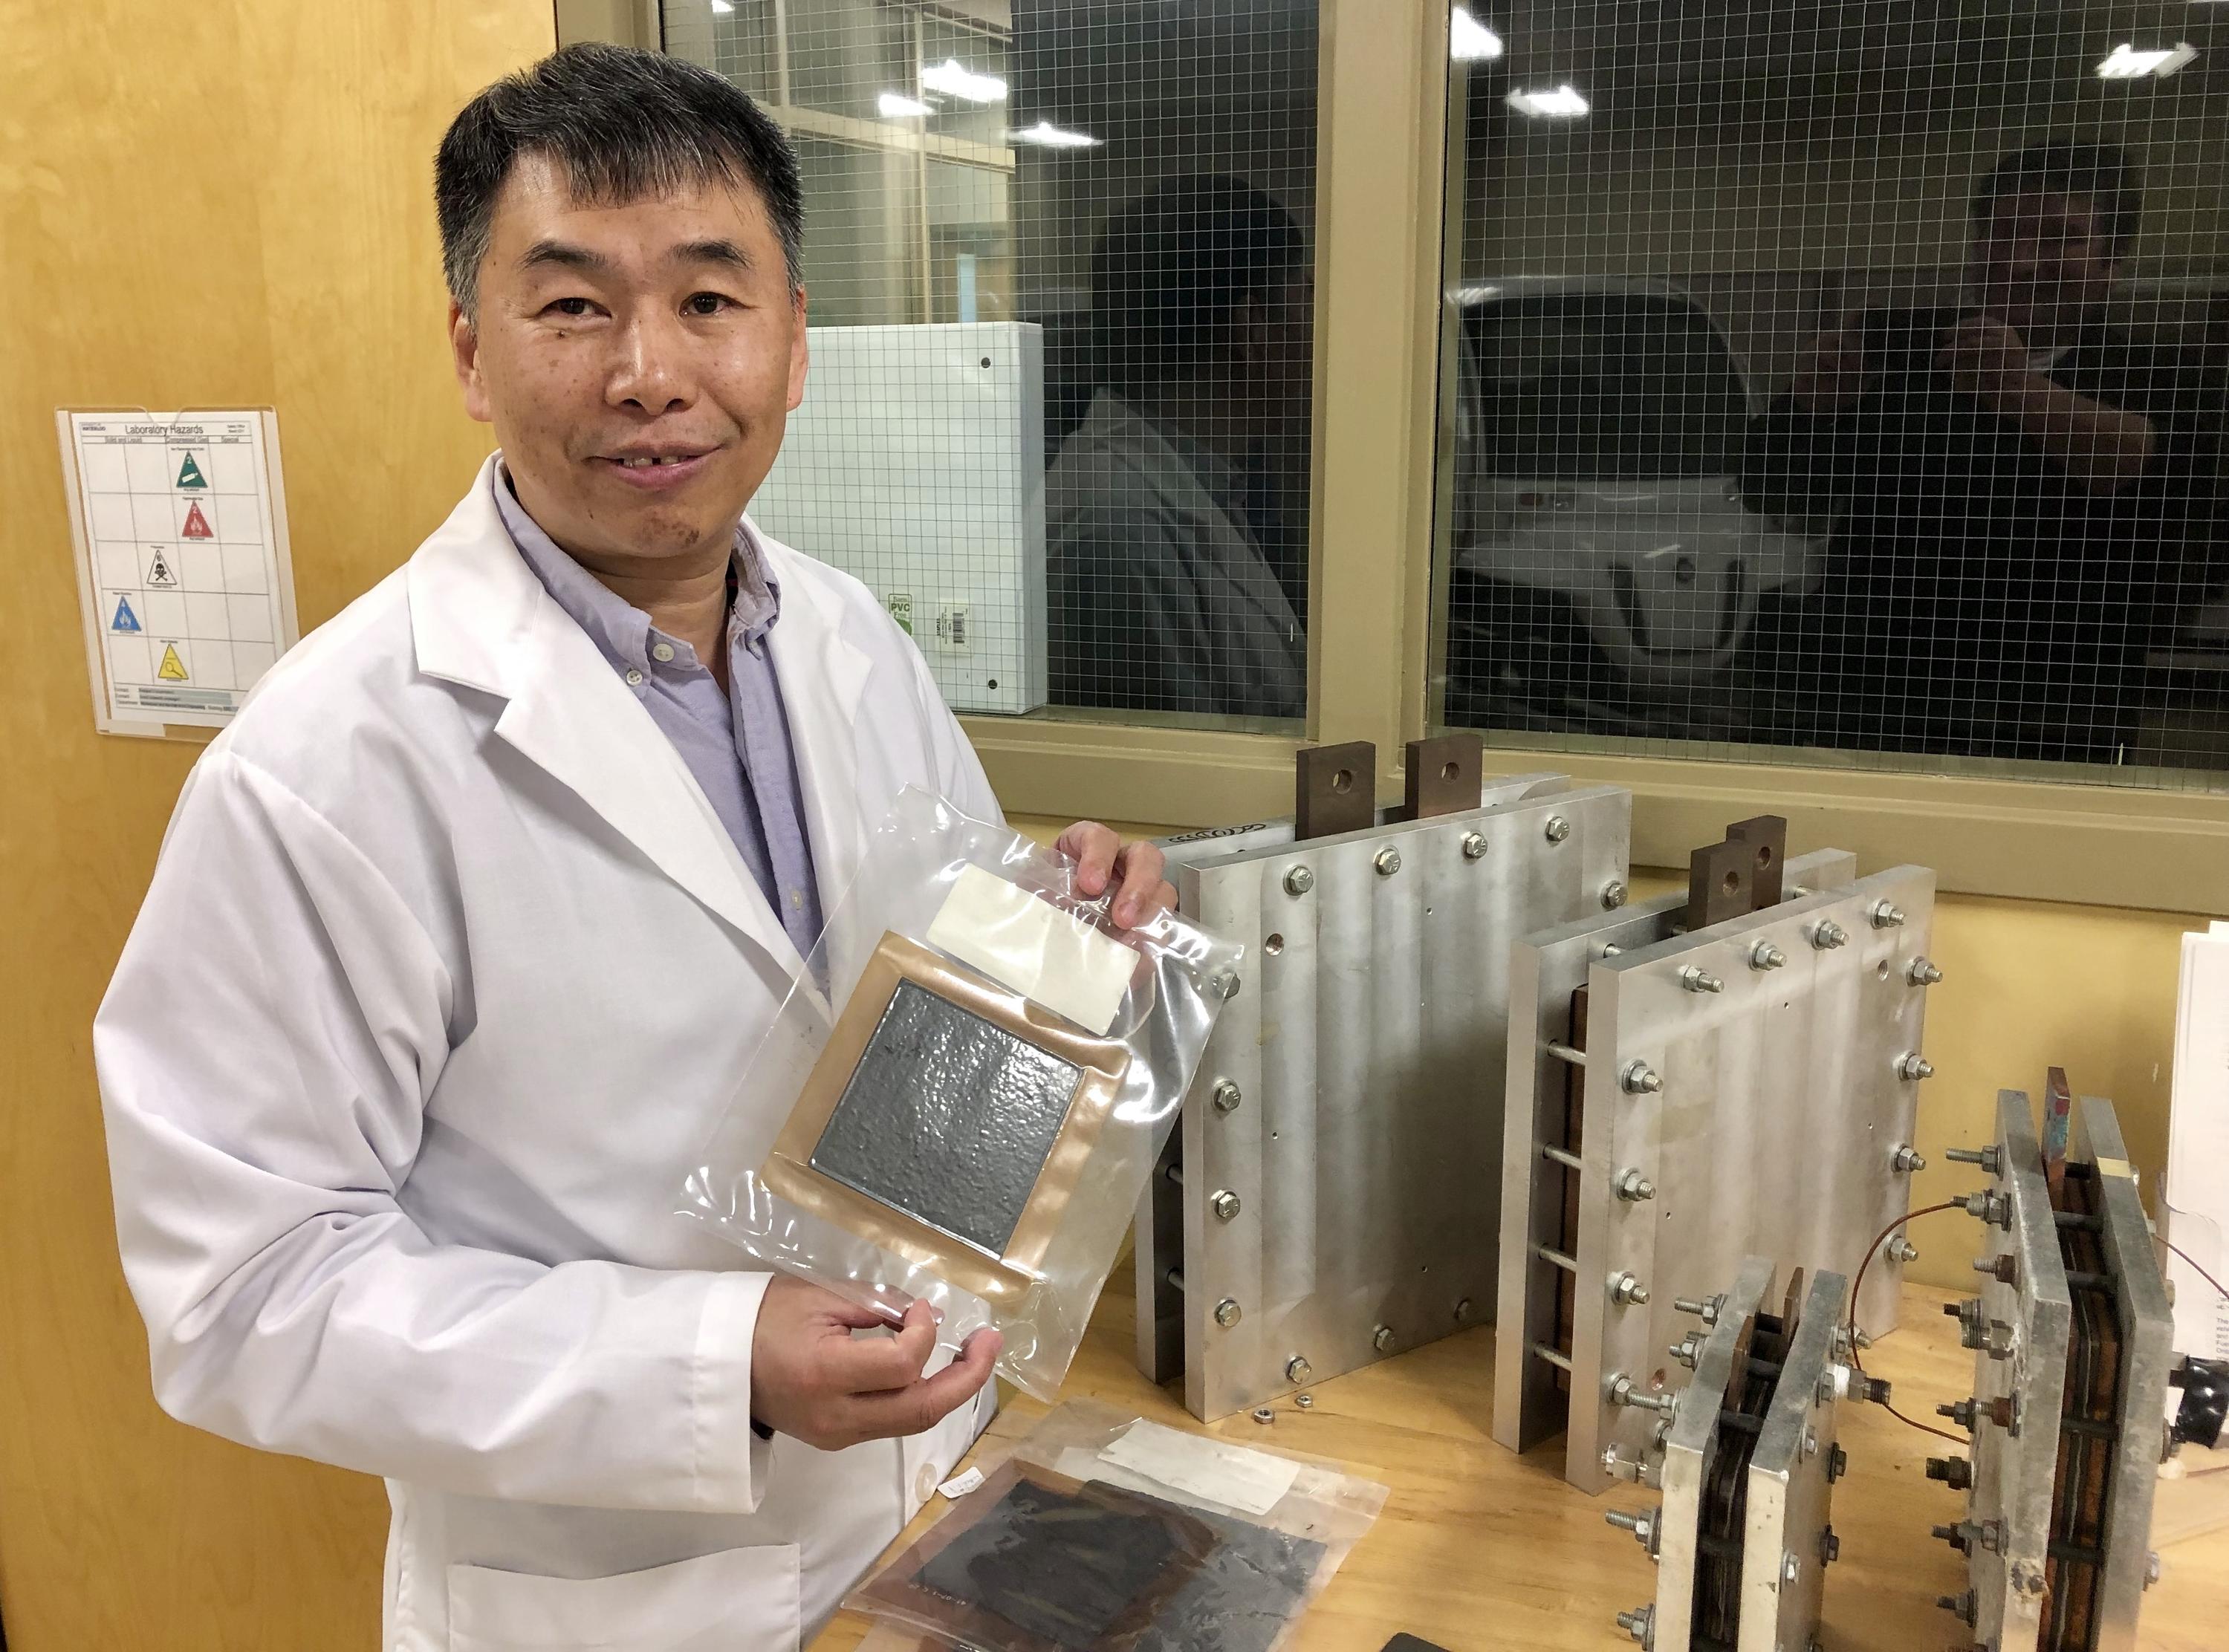 Waterloo Engineering professor Xianguo Li displays a fuel cell in his lab.